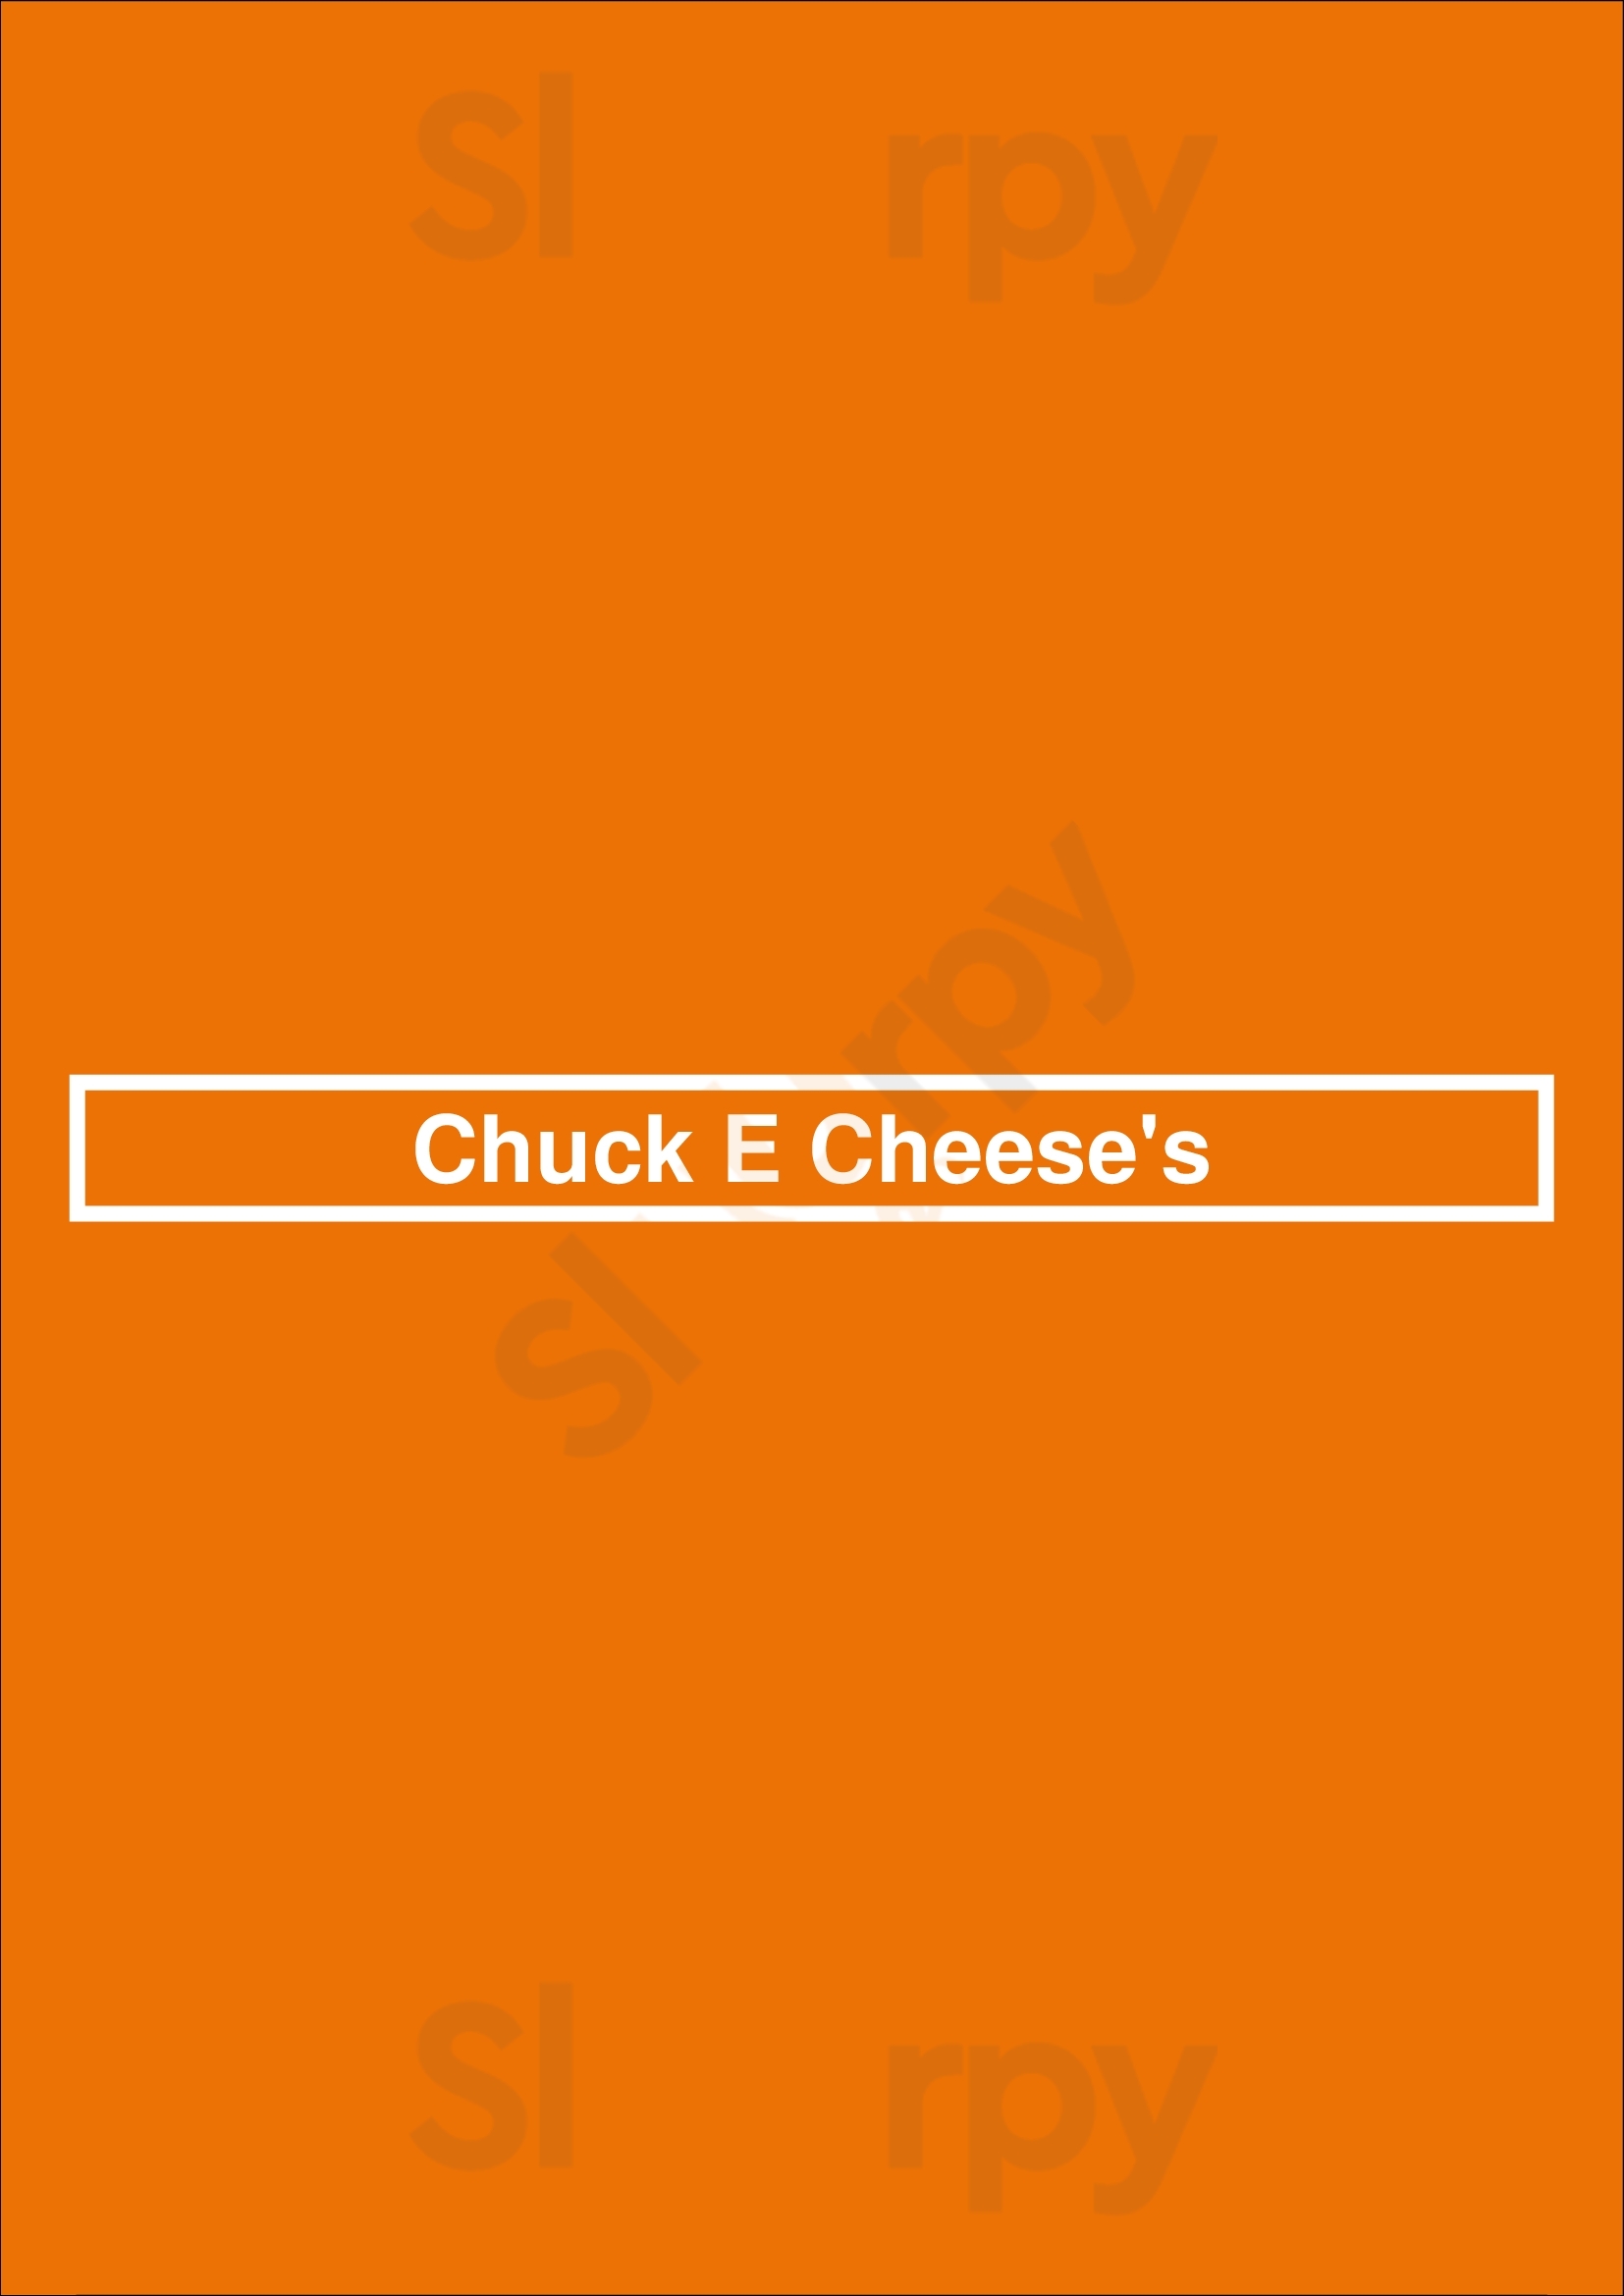 Chuck E. Cheese Fayetteville Menu - 1